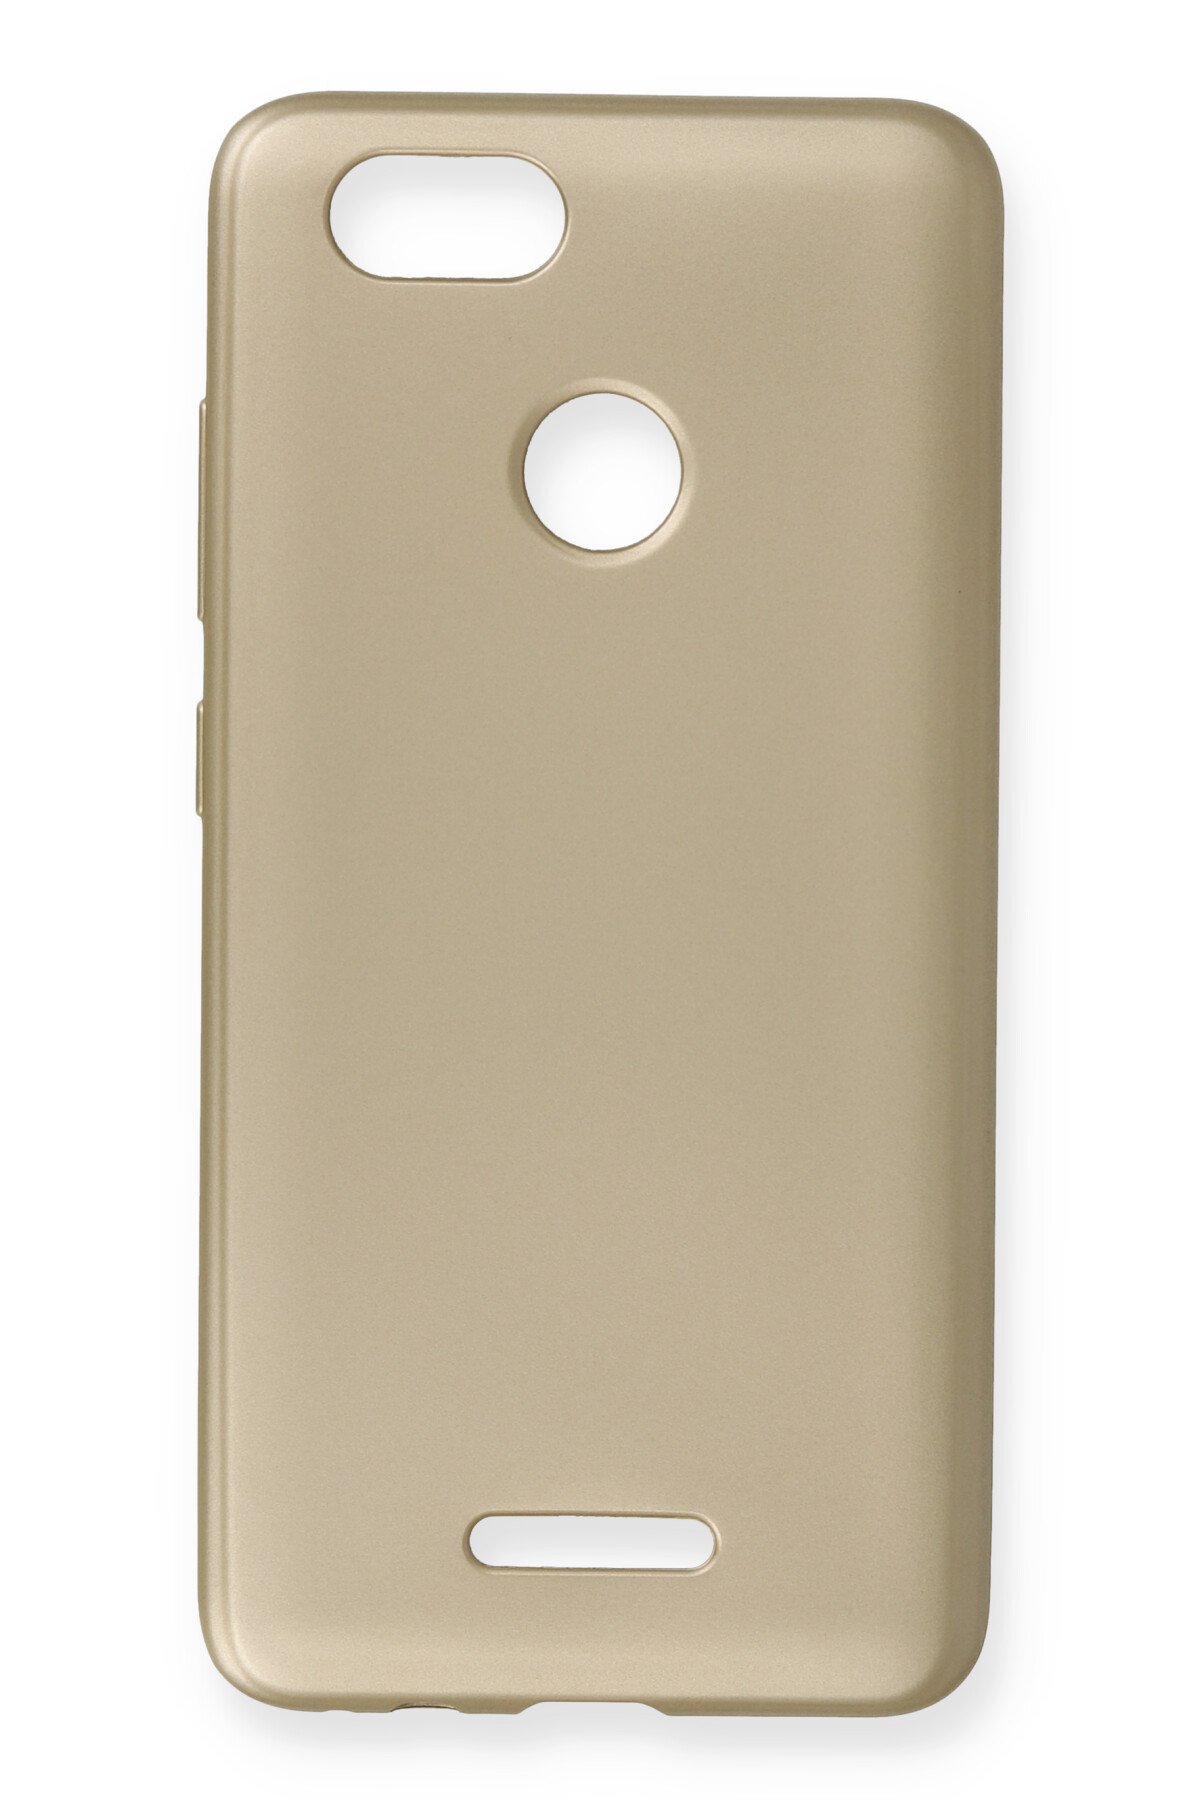 NewFace Newface Casper Via M4 Kılıf Premium Rubber Silikon - Gold